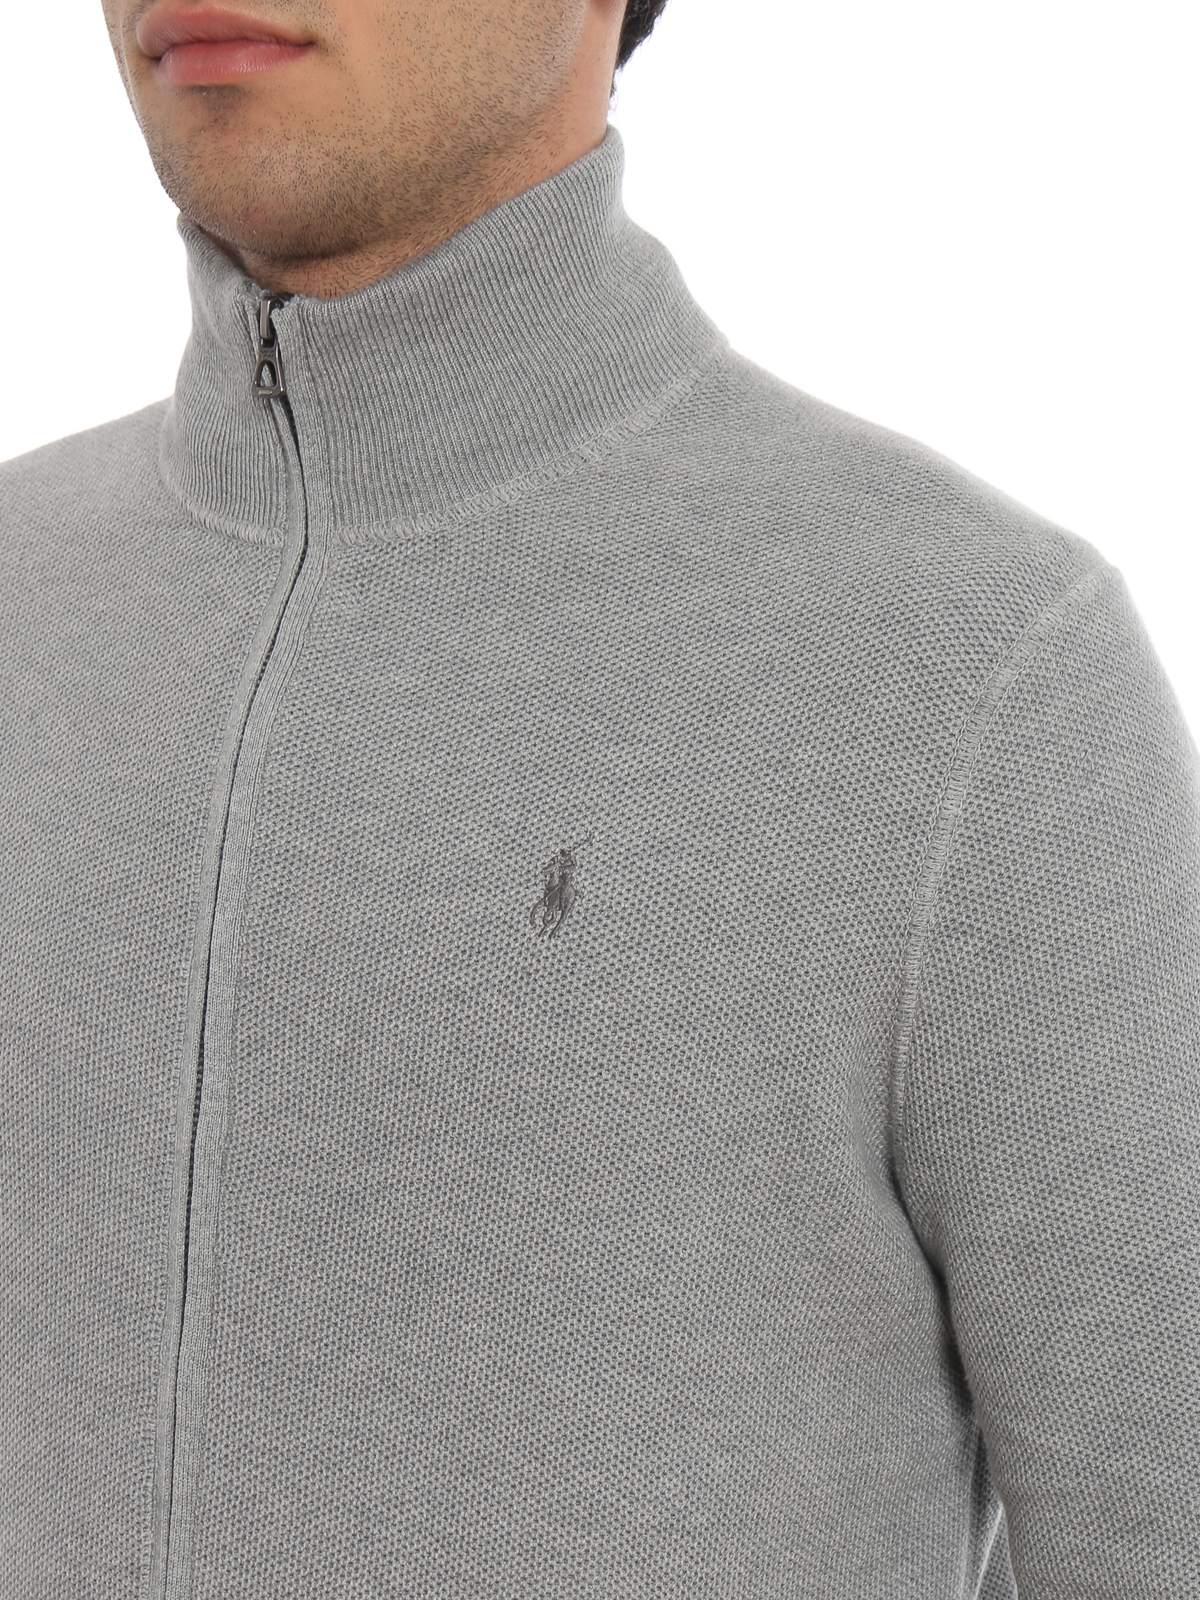 Polo Ralph Lauren - Grey cotton zipped 